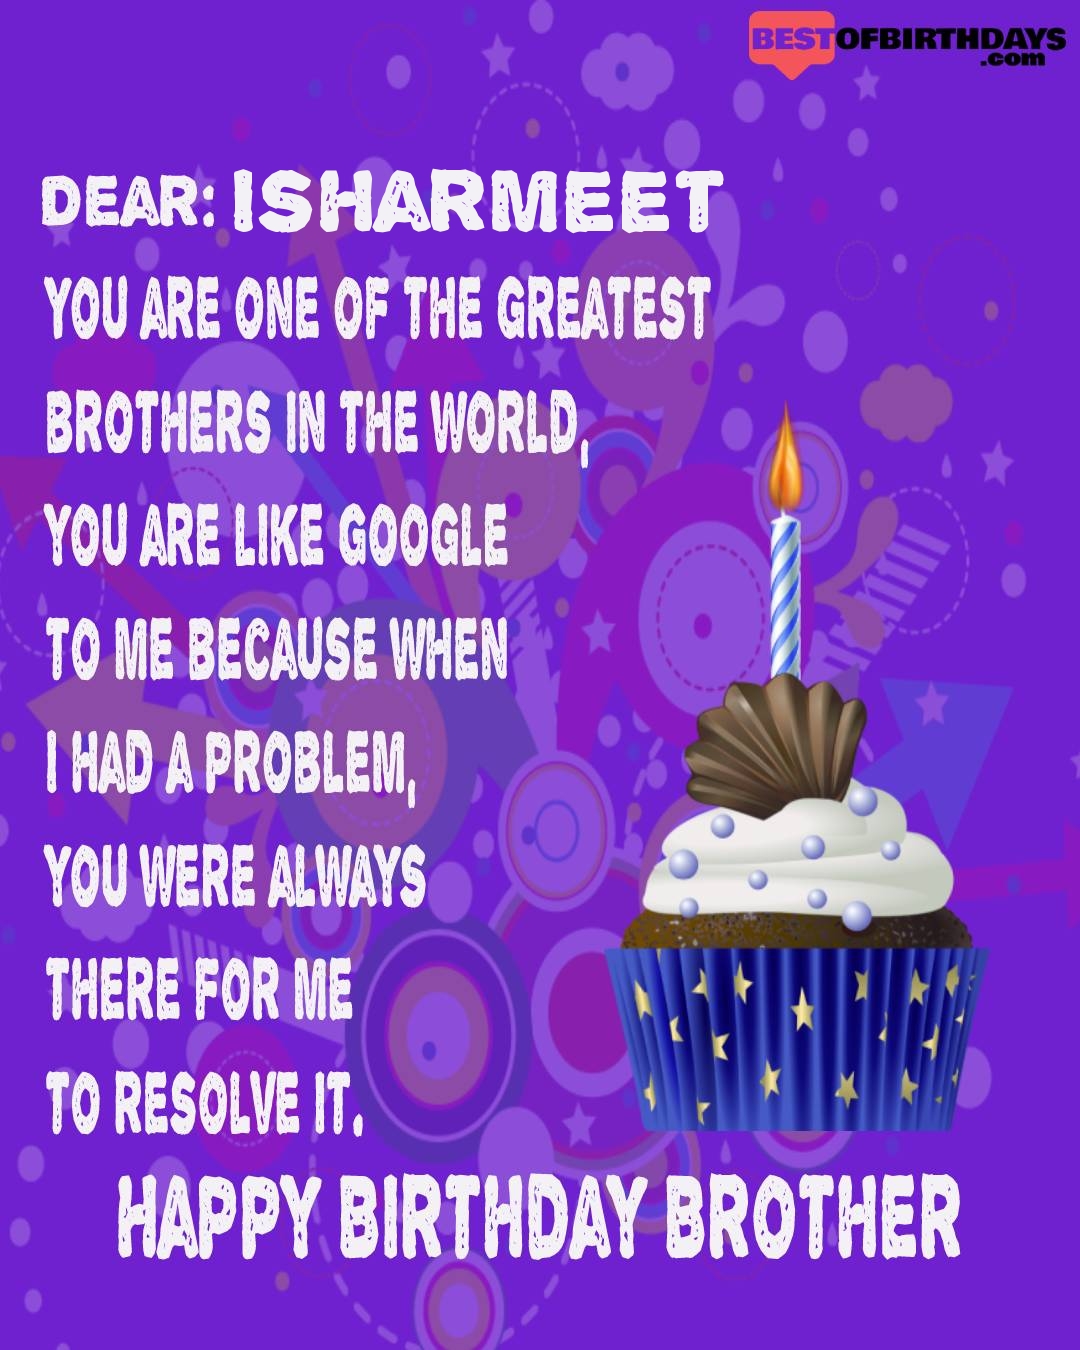 Happy birthday isharmeet bhai brother bro